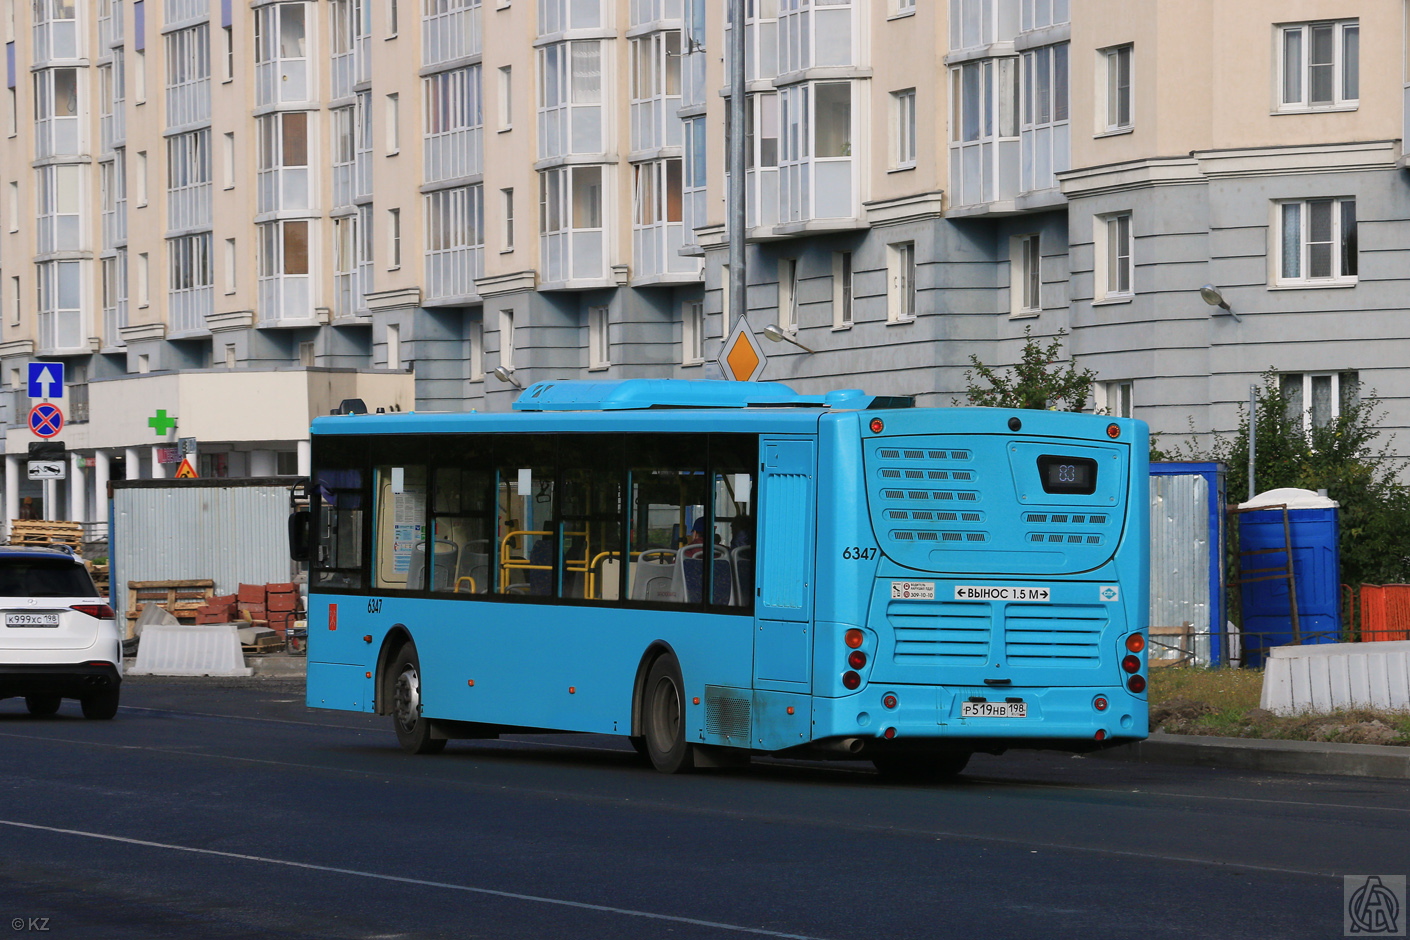 Санкт-Петербург, Volgabus-5270.G4 (LNG) № 6347